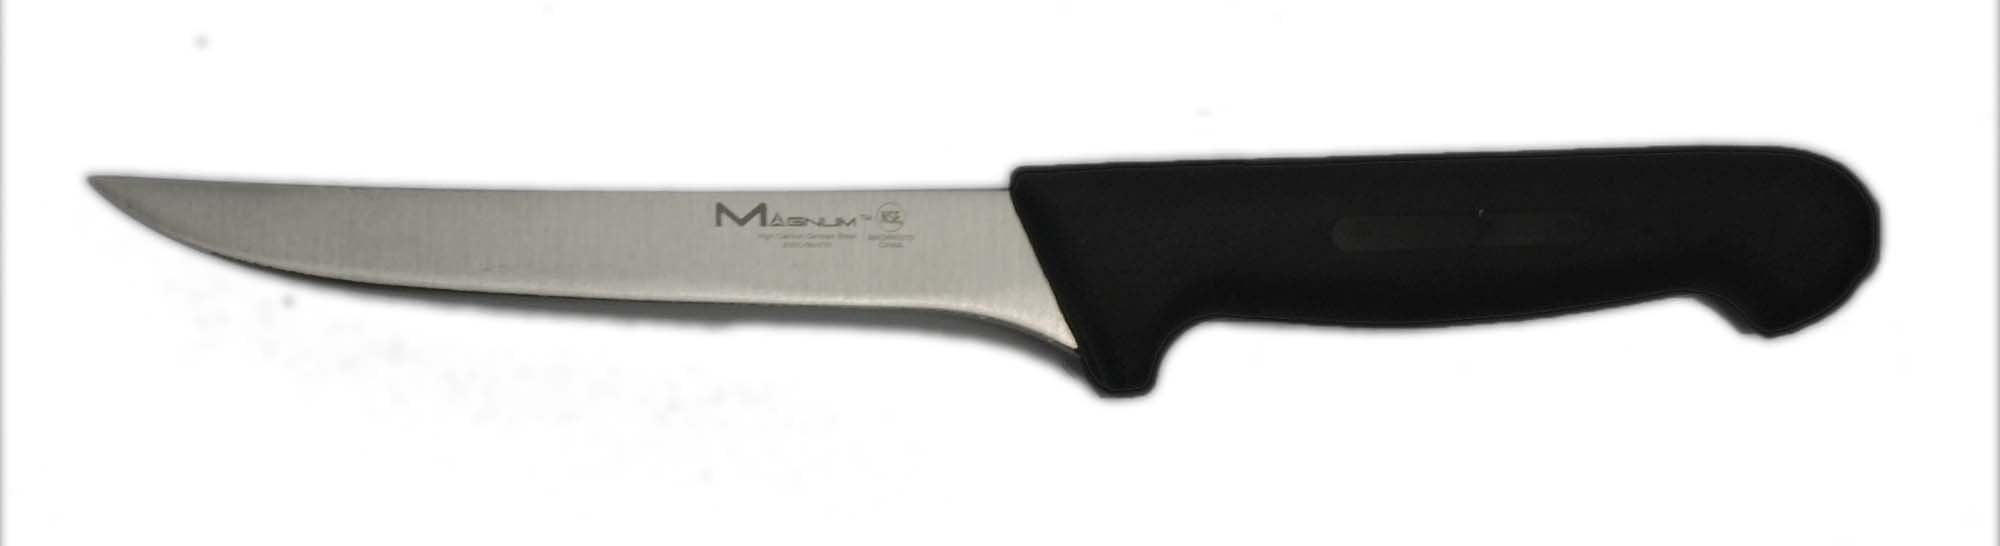 Magnum | 6" Boning Knife | Kitchen Equipped